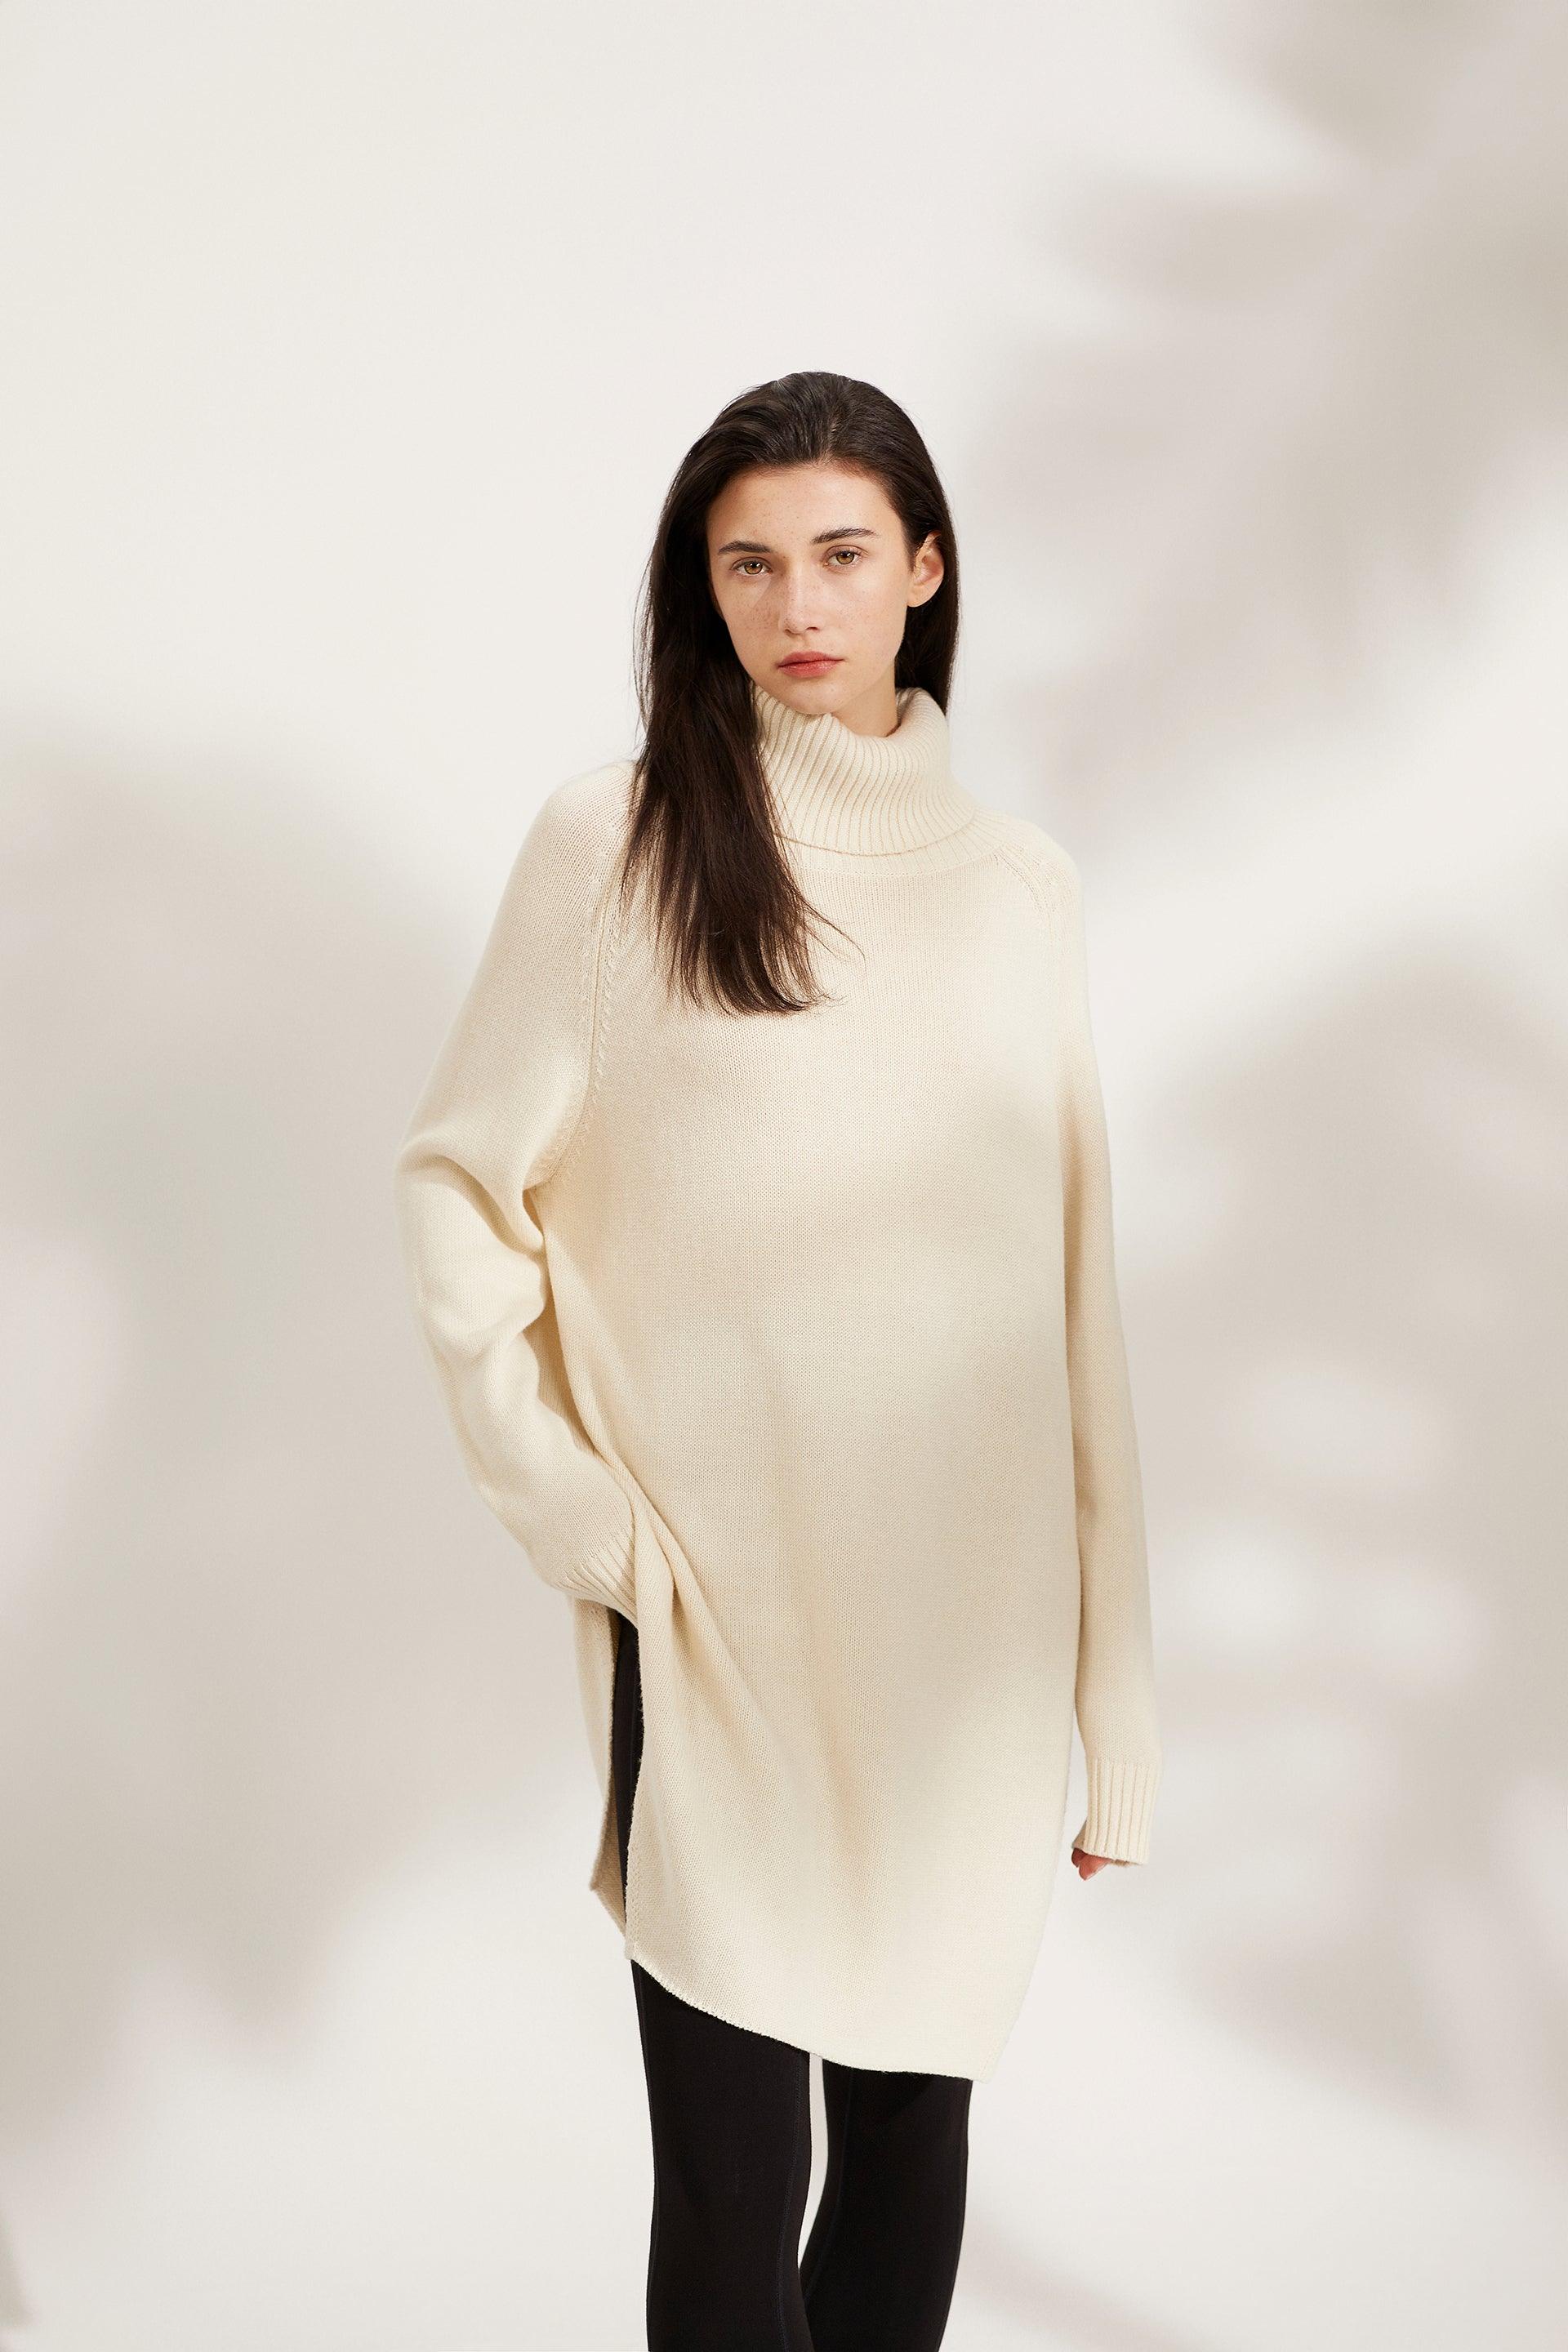 Women's Oversized Turtleneck Sweater - NOT LABELED